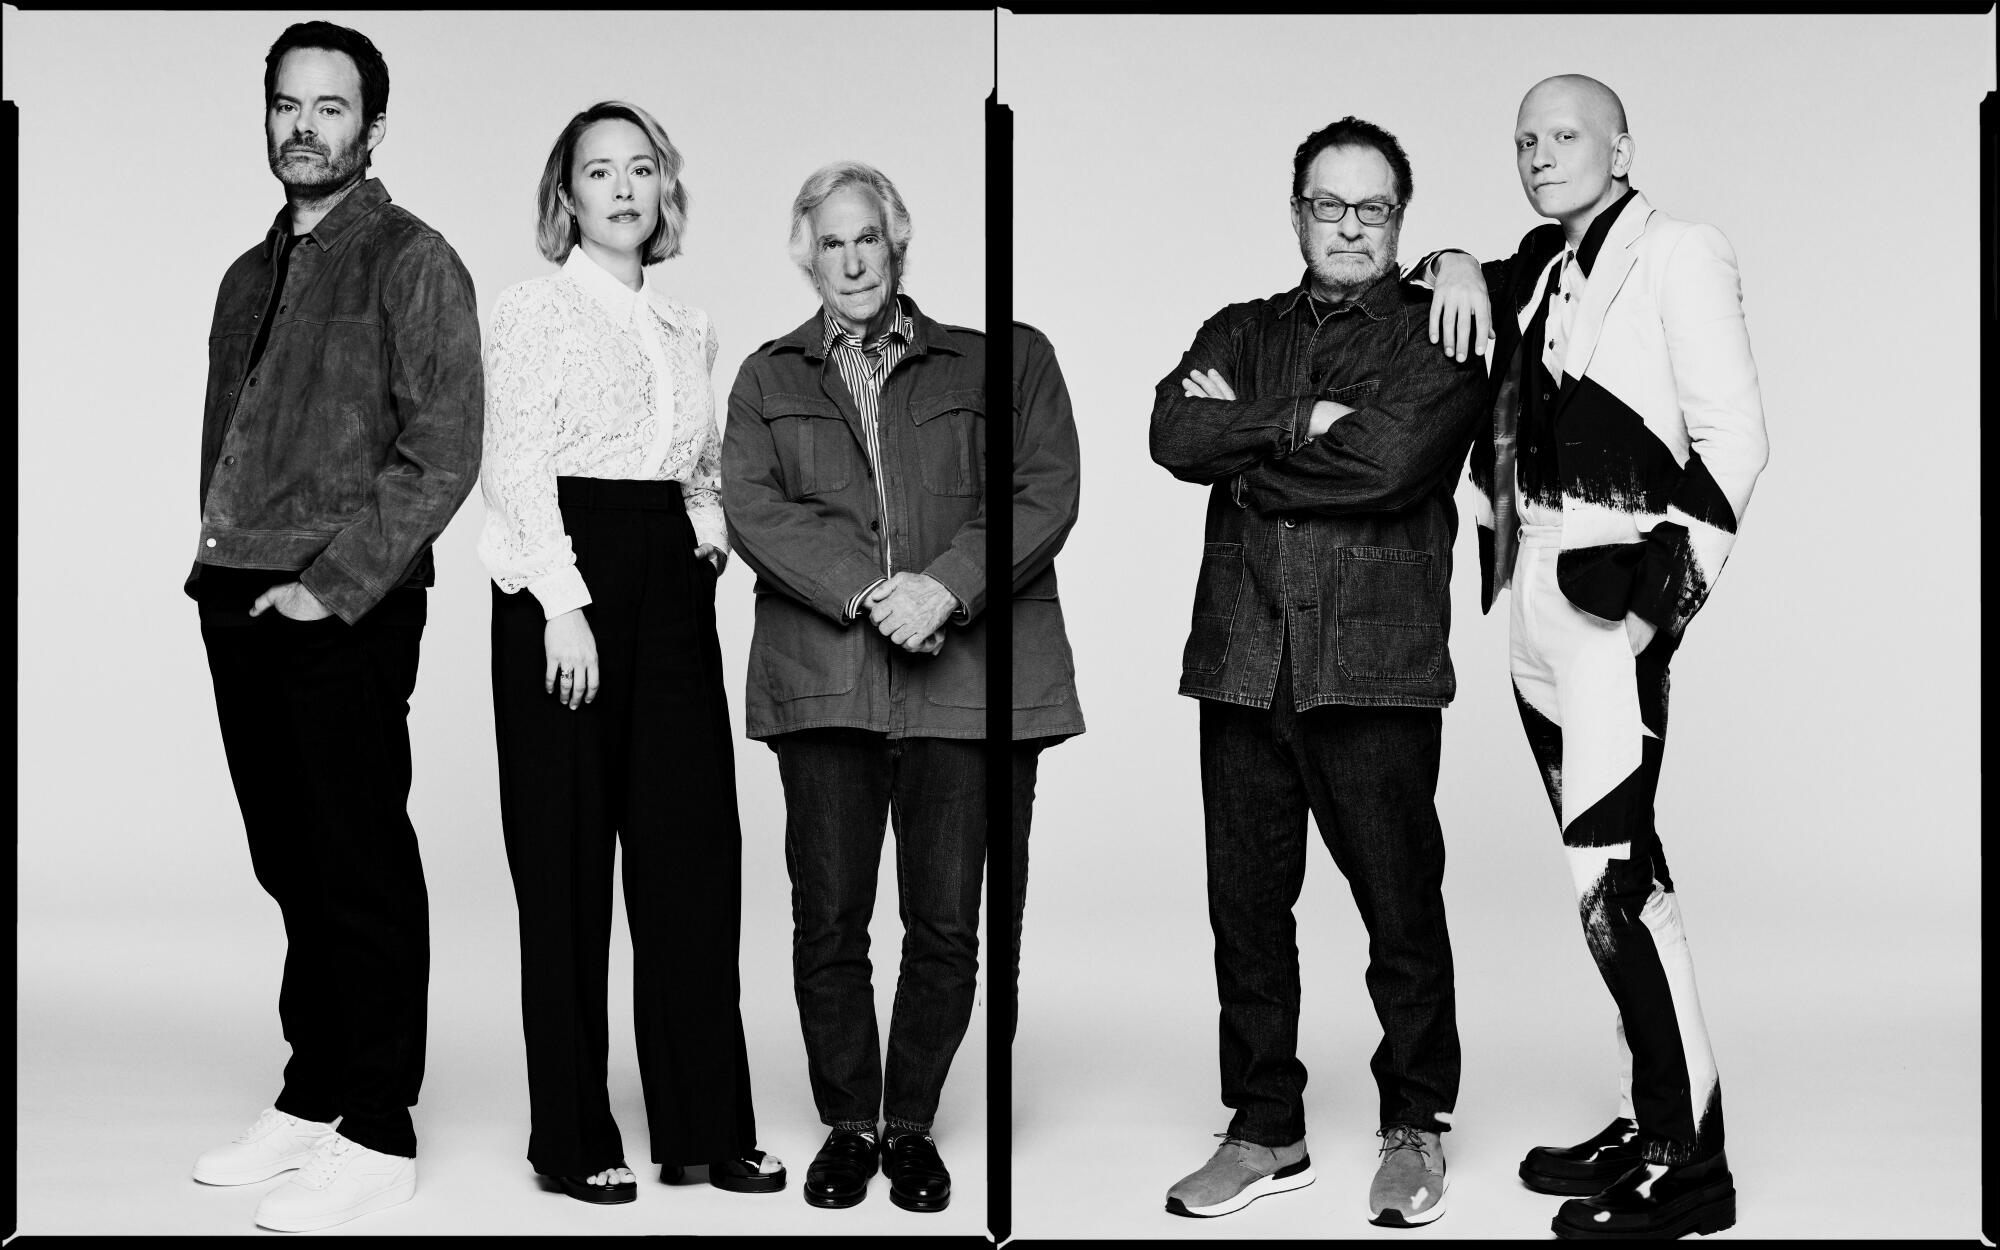 Bill Hader, Sarah Goldberg, Henry Winkler, Stephen Root and Anthony Carrigan stand shoulder to shoulder for a photo.